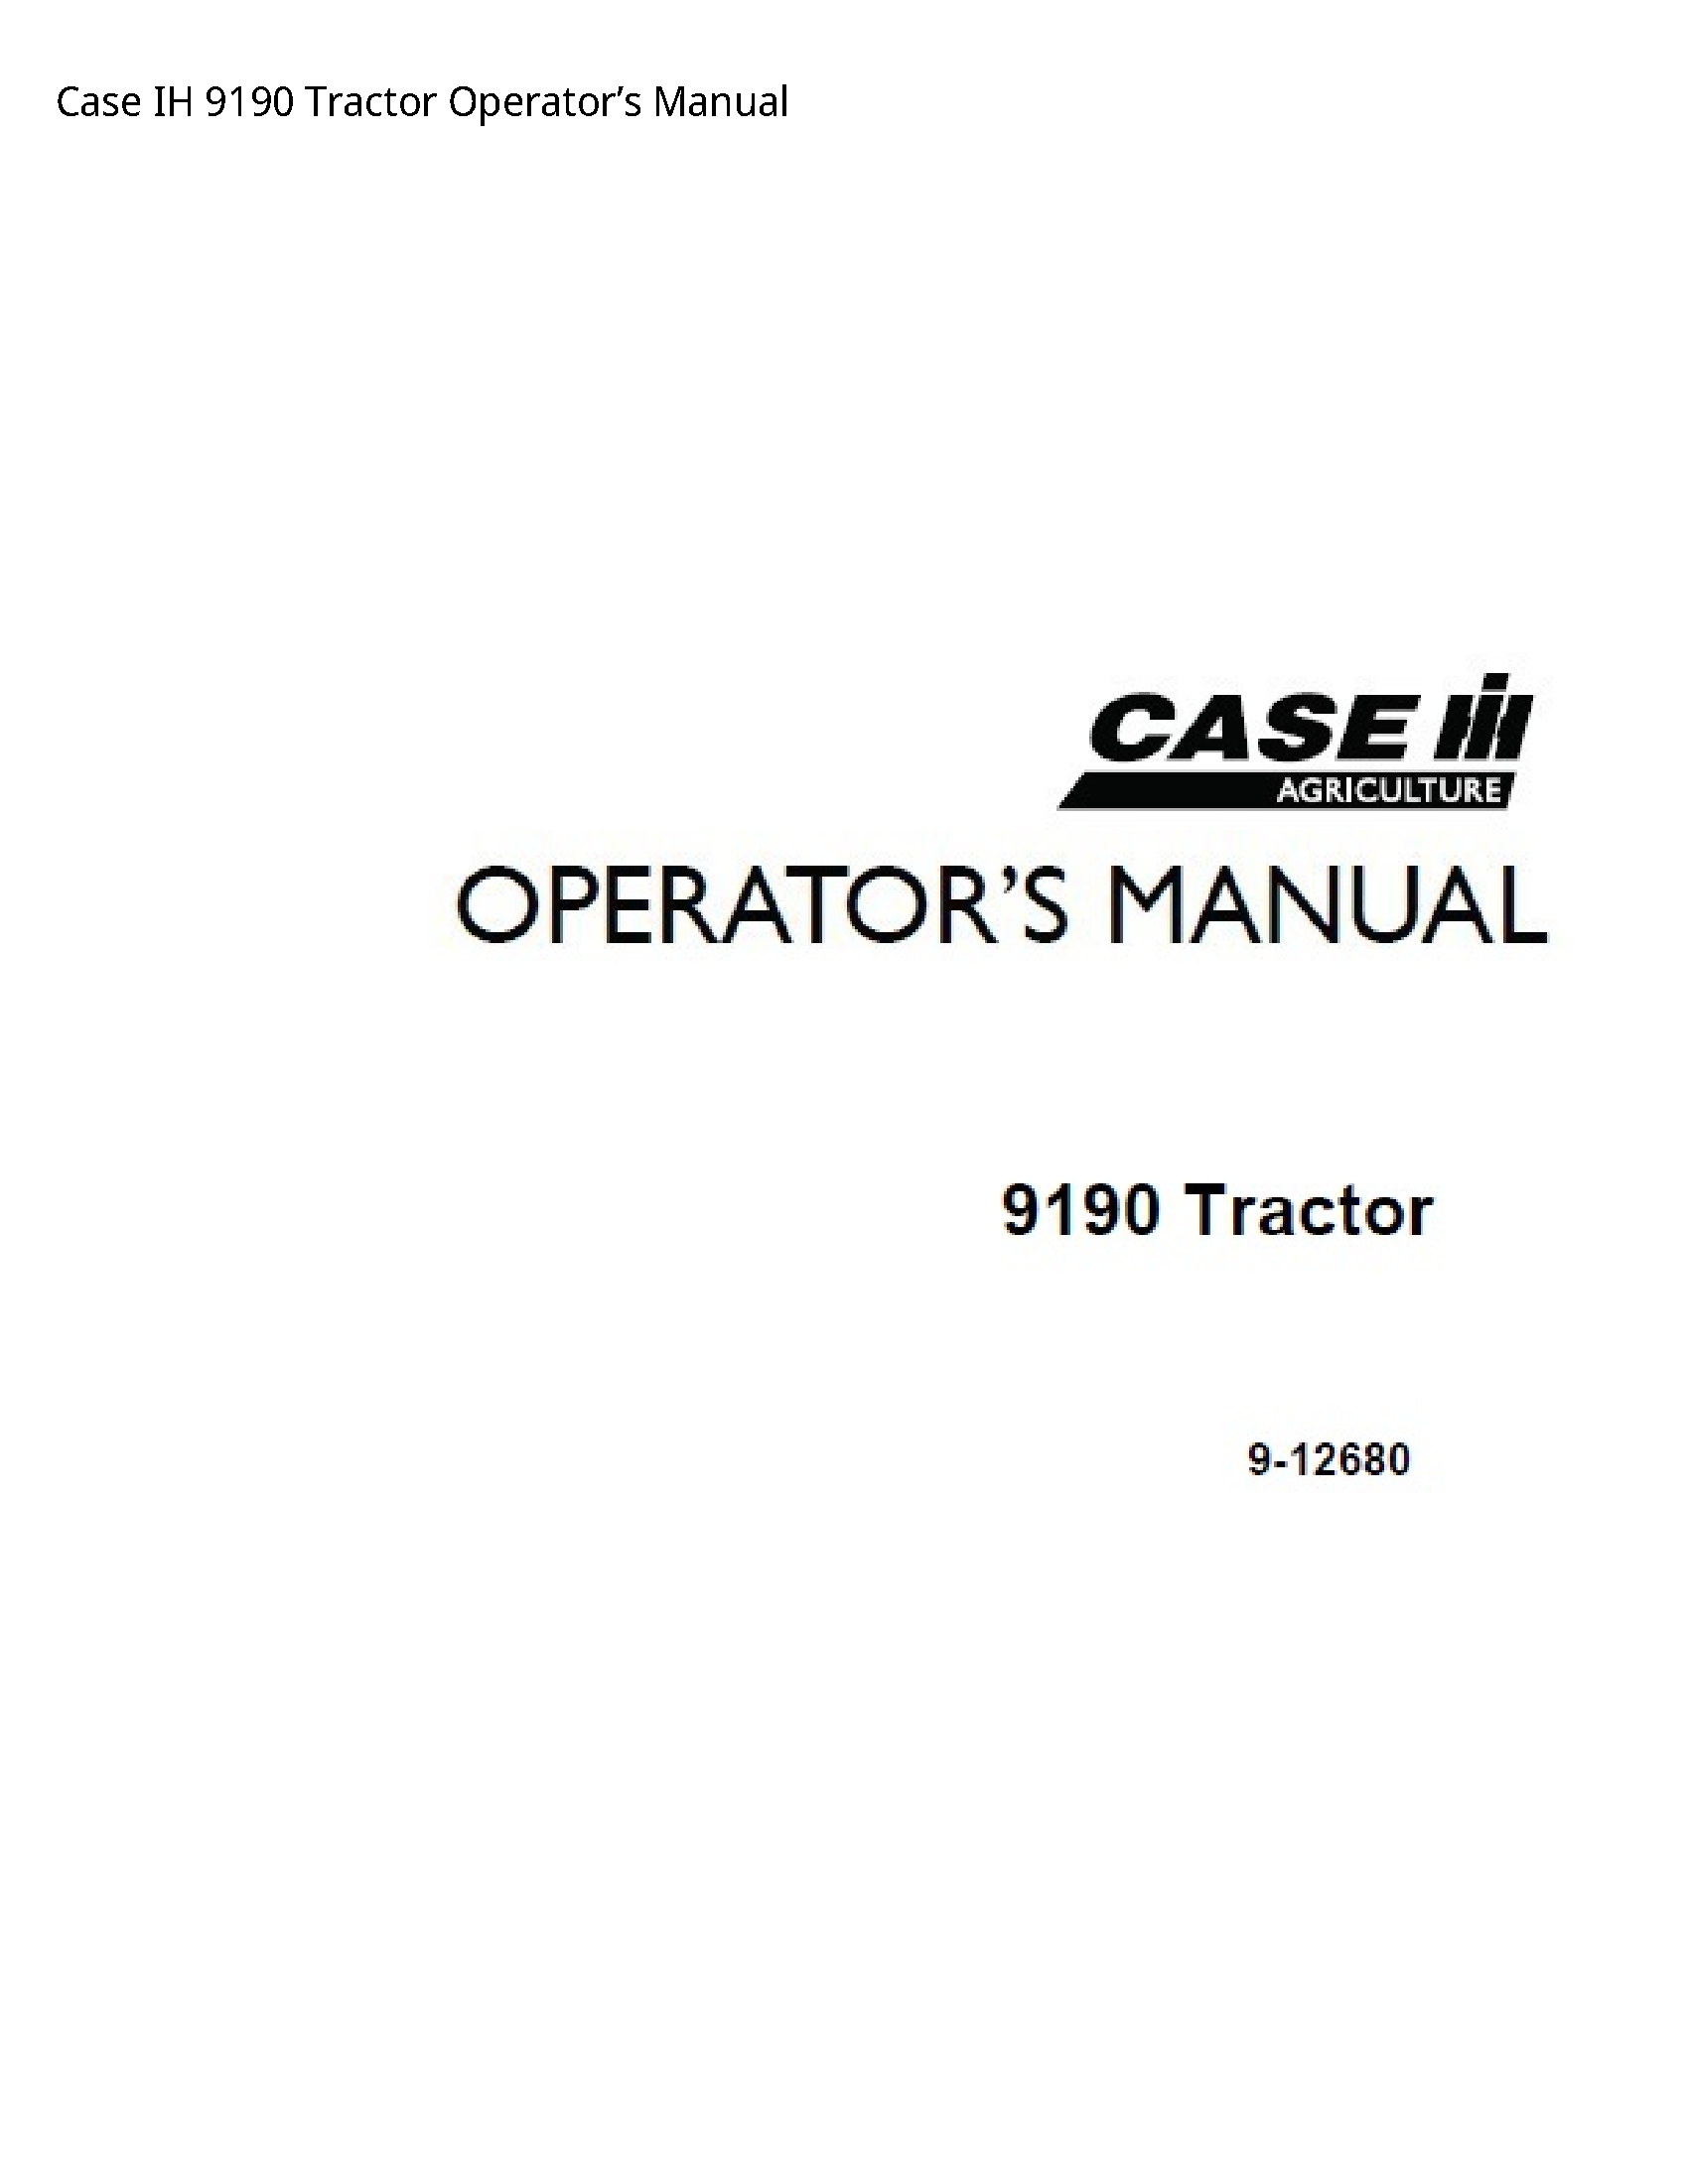 Case/Case IH 9190 IH Tractor Operator’s manual